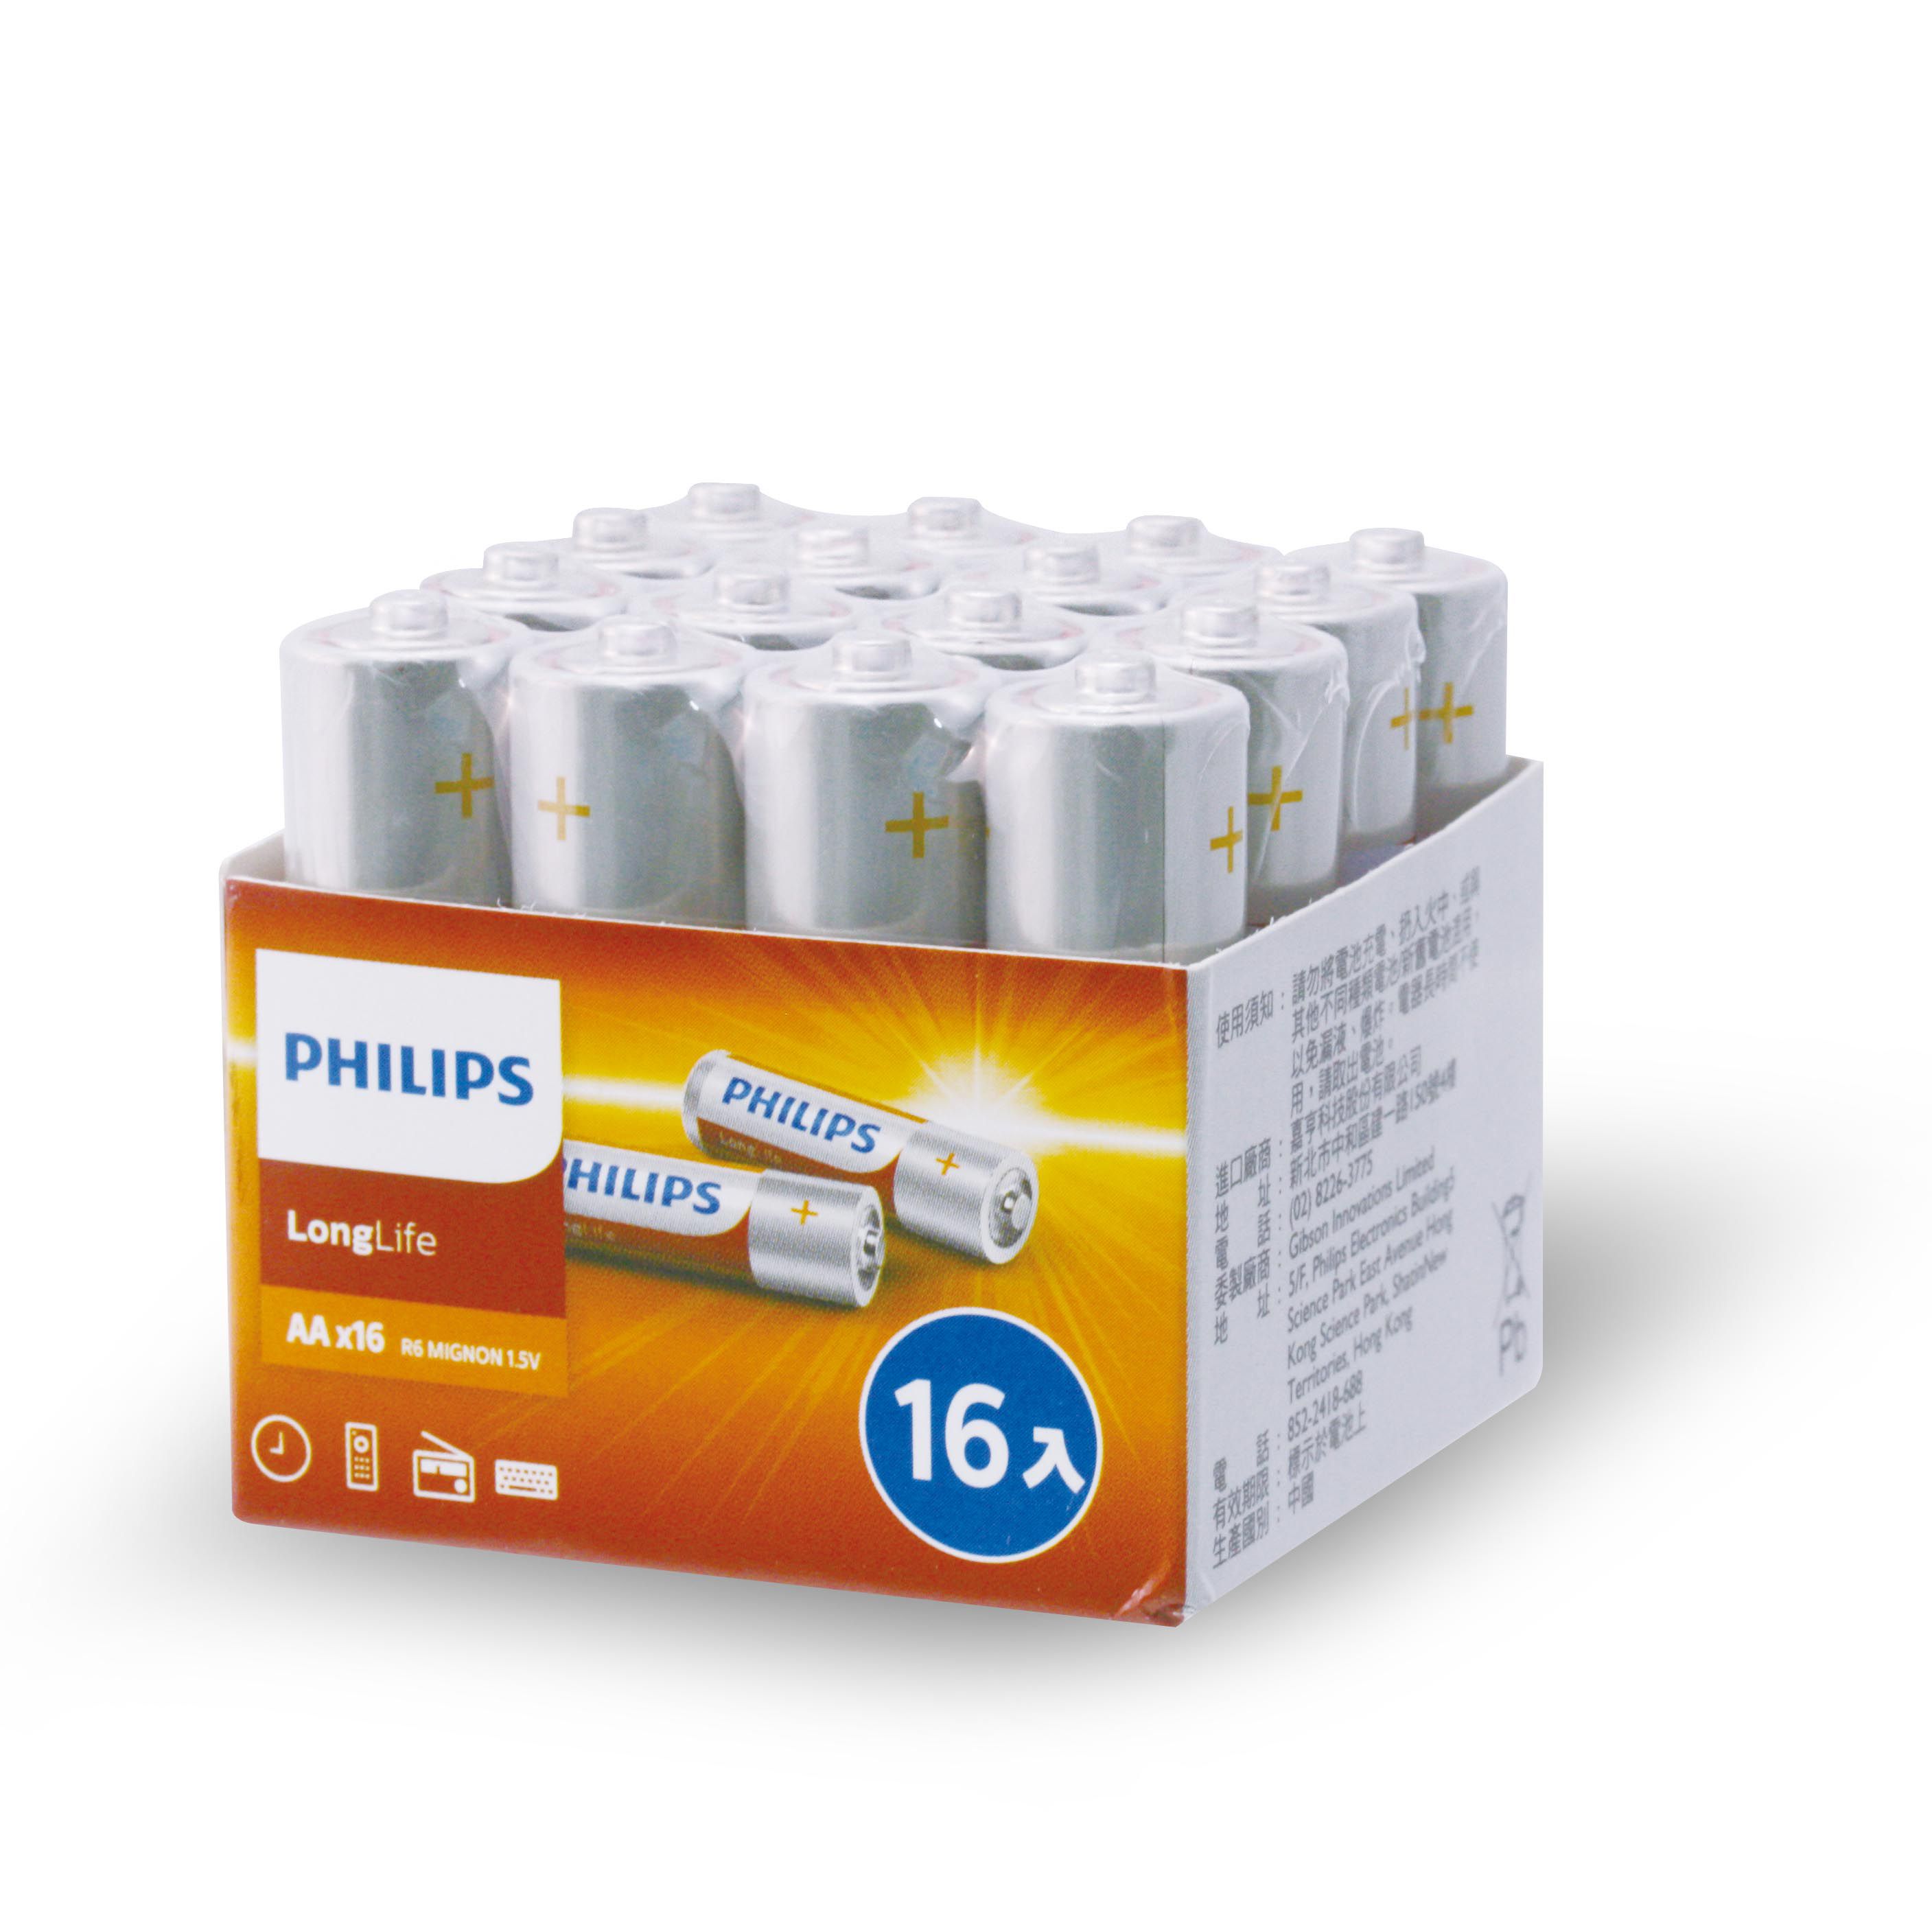 Philips battery longlife zinc aa 1. 5v 16pcs r6l16f/97 price in Kuwait, X-Cite Kuwait